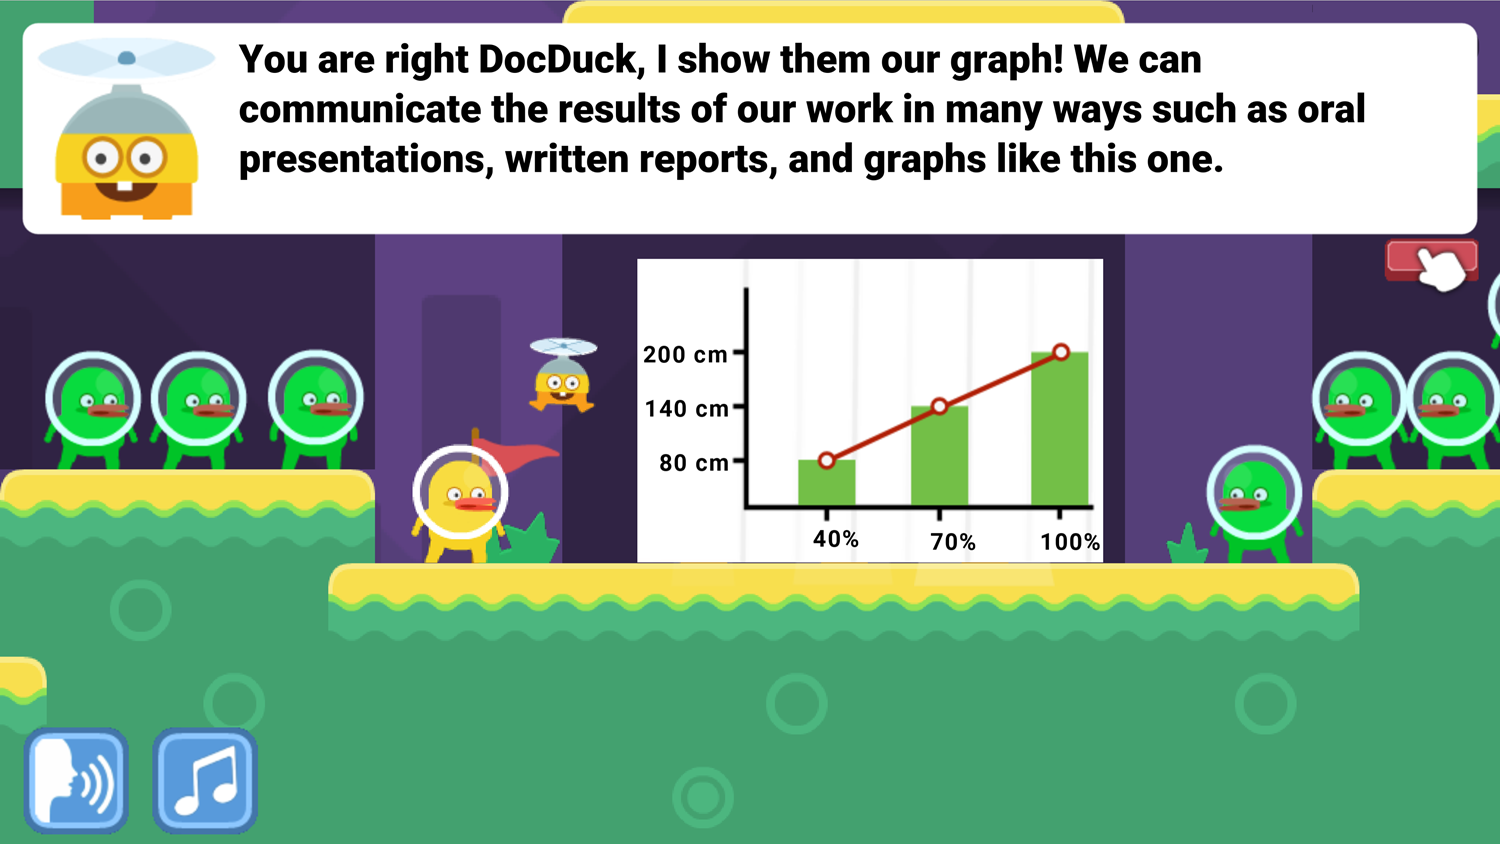 DocDuck Scientific Method Game Communicating Results Screenshot.